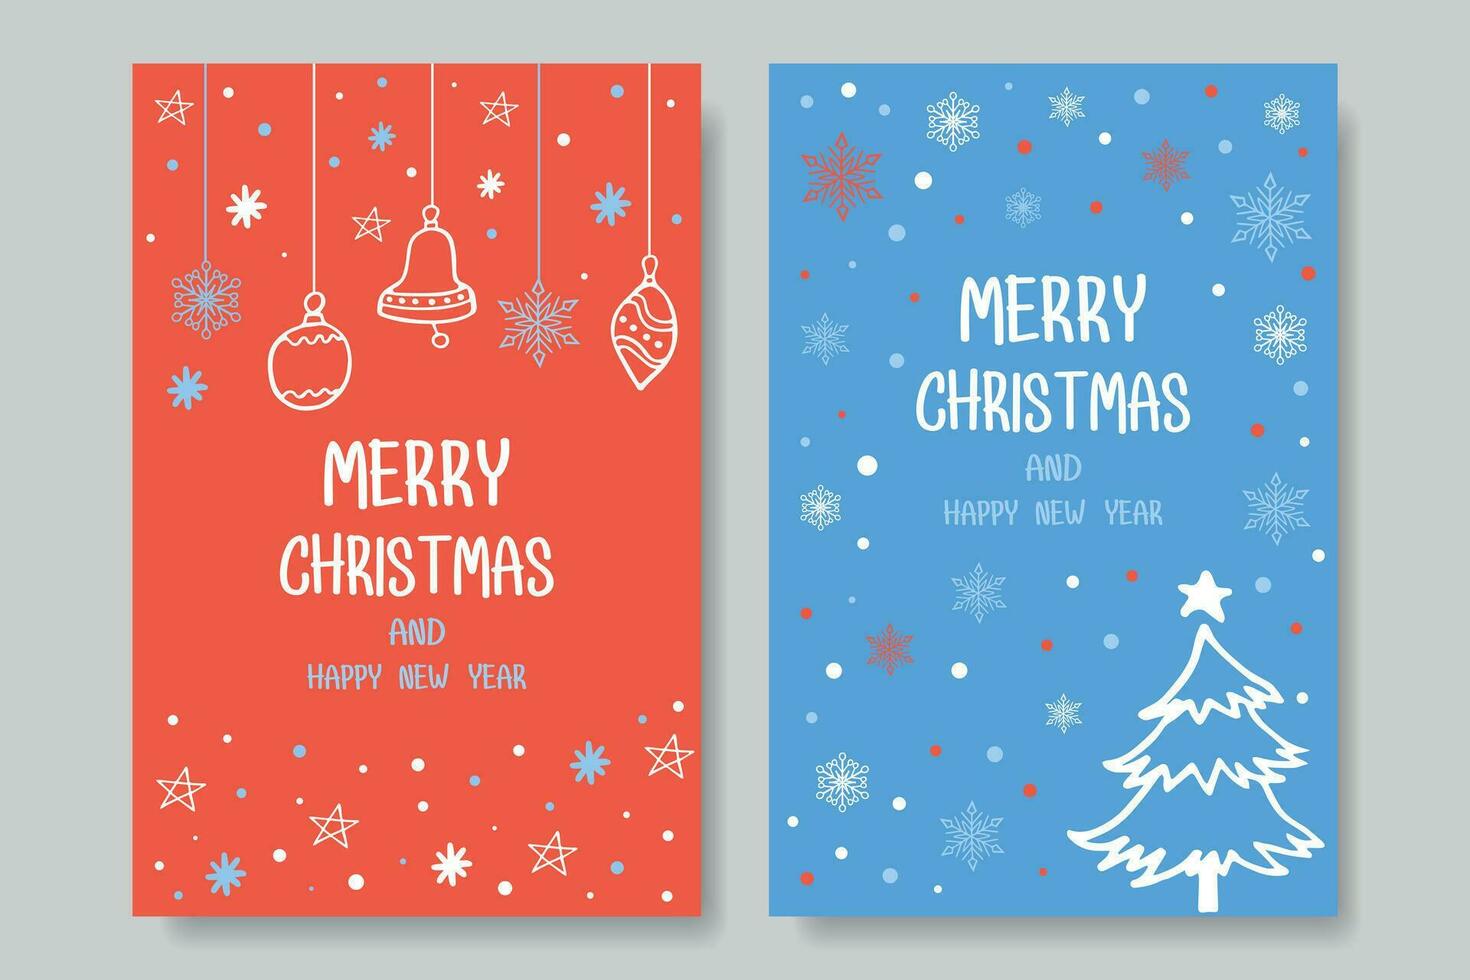 Christmas tree, snowflakes, berries, handmade elements. Winter vector illustration for Christmas invitation, card, banner, social media post.